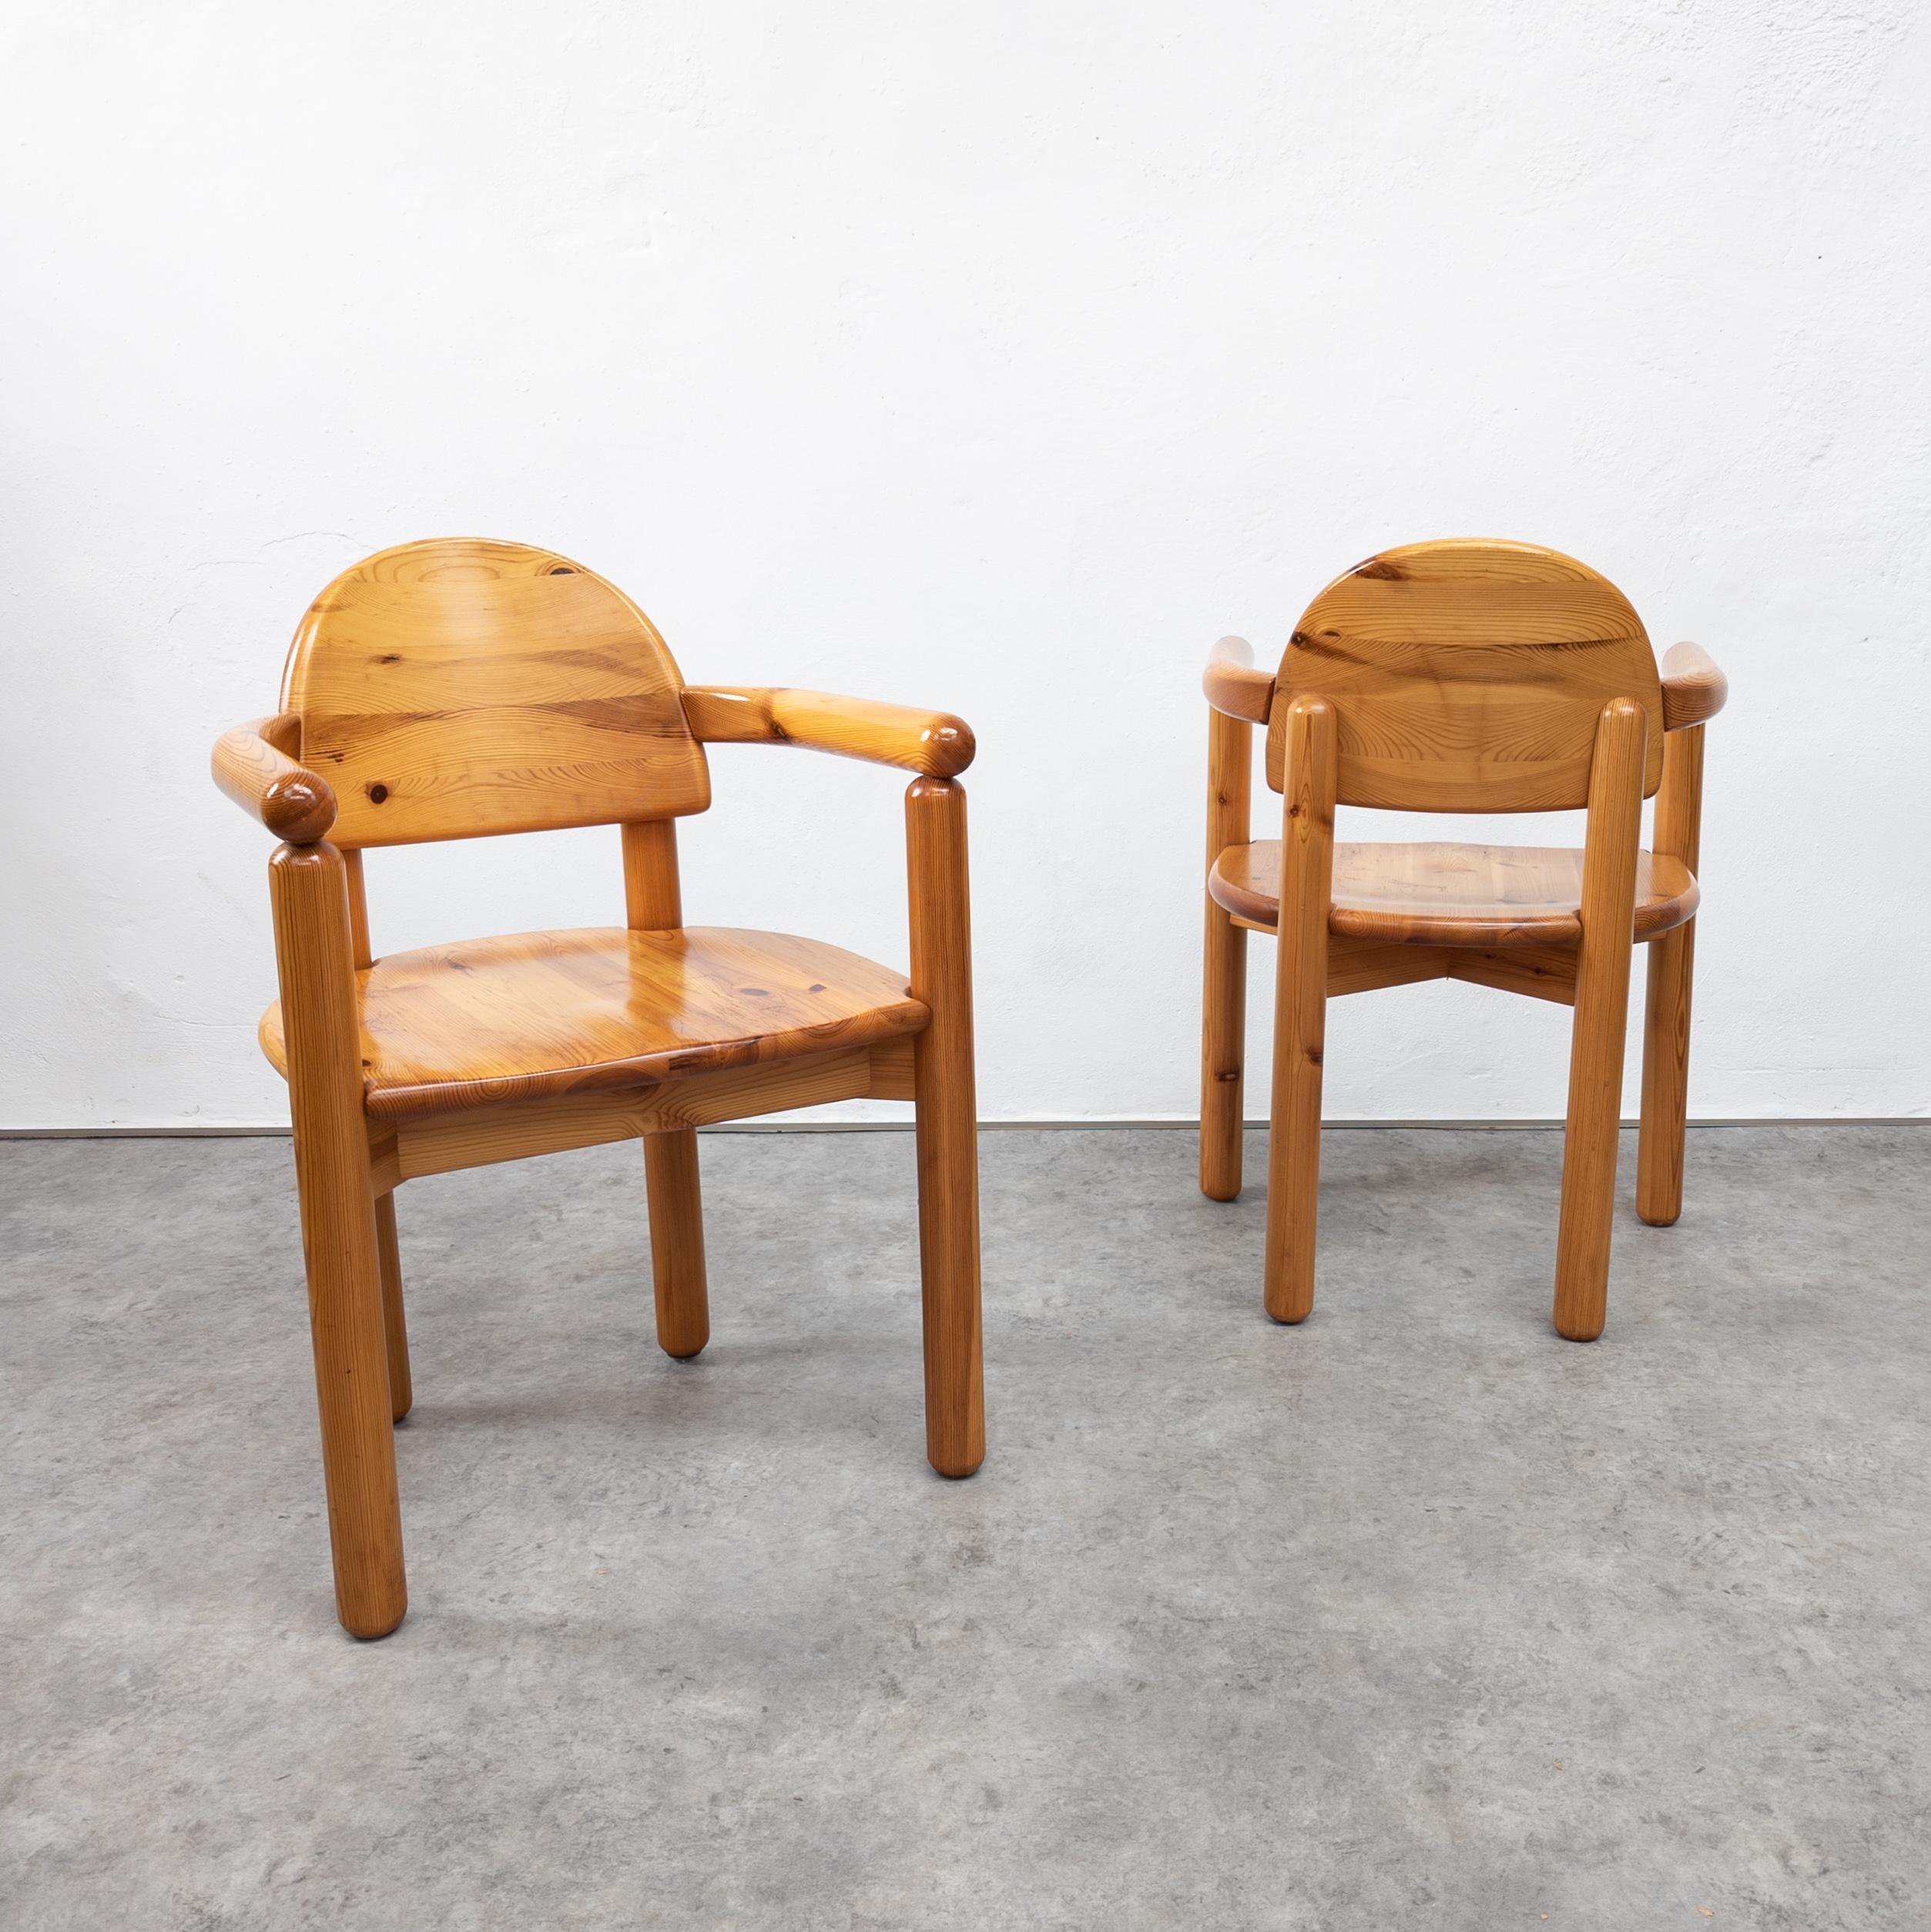 Danish Pair of Vintage Pine Chairs by Rainer Daumiller for Hirtshals Sawmill, Denmark 1